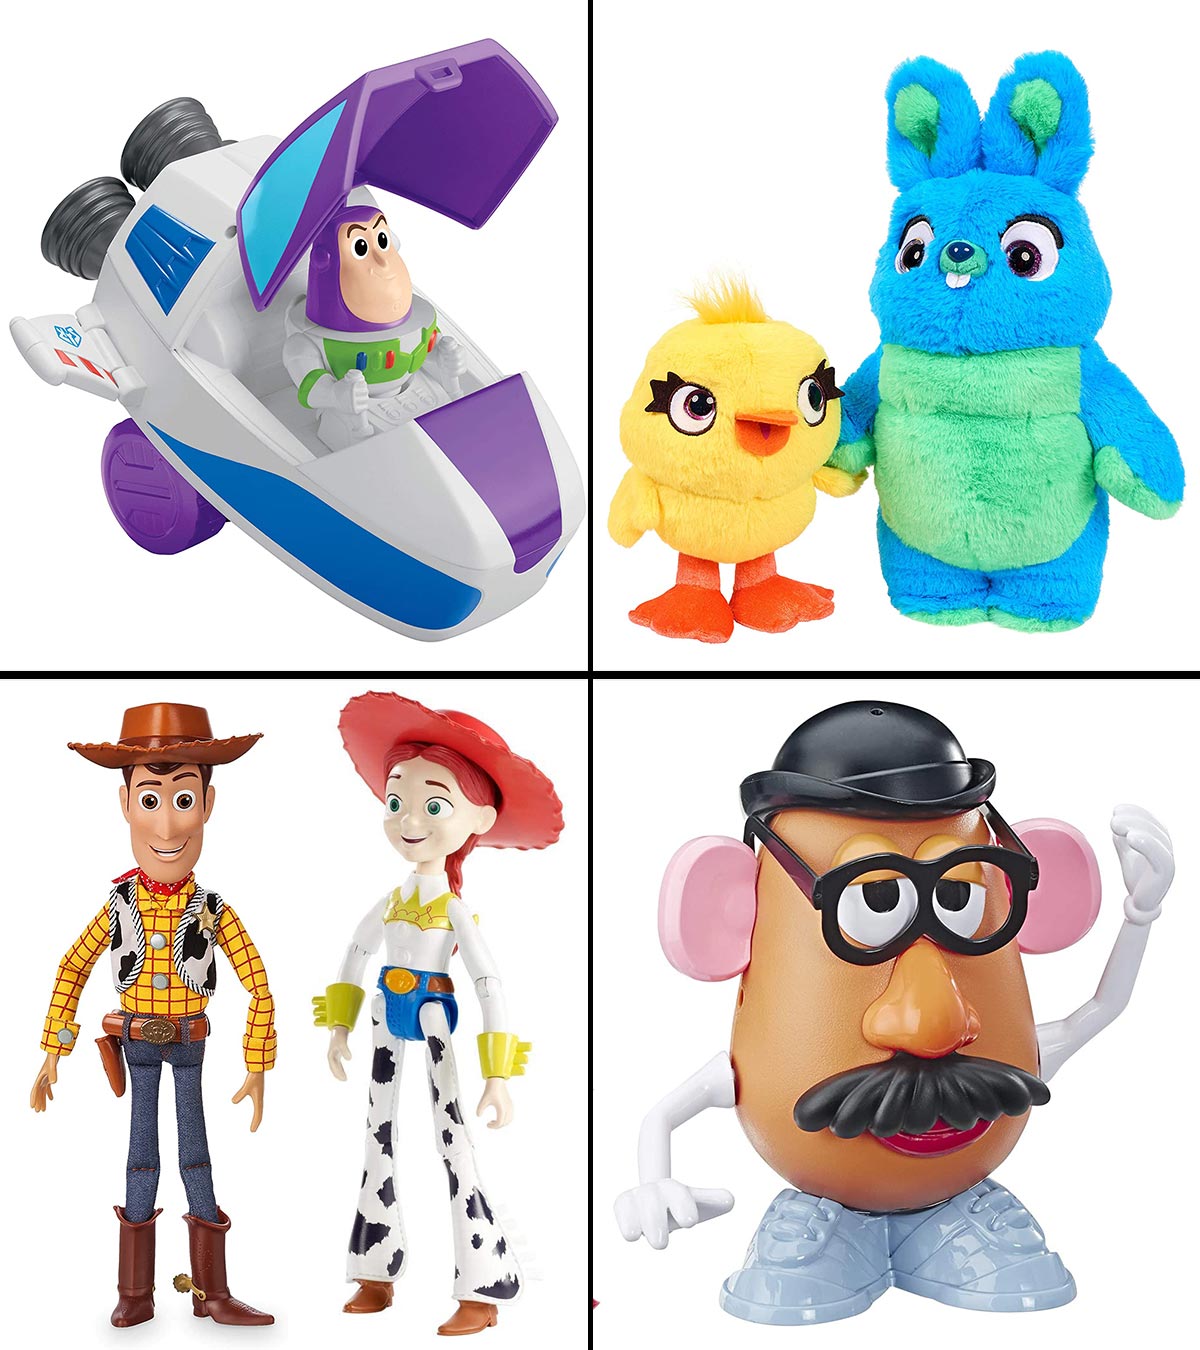 https://www.momjunction.com/wp-content/uploads/2020/06/20-Best-Toy-Story-Toys-Banner.jpg